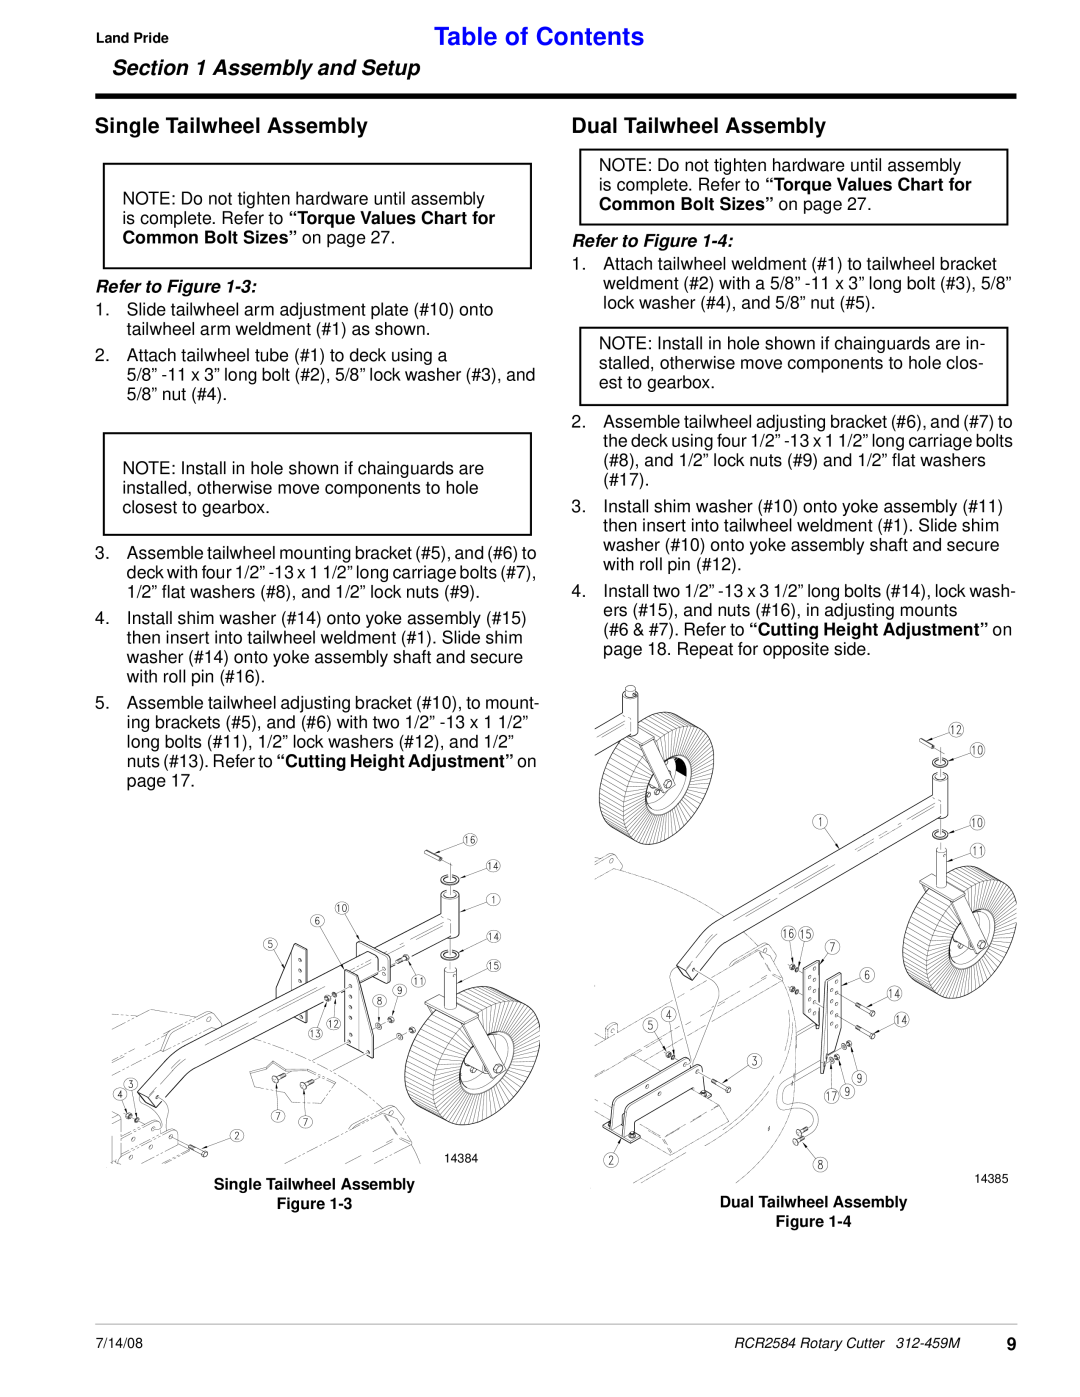 Land Pride RCR2584 manual Single Tailwheel Assembly, Dual Tailwheel Assembly, Table of Contents, Assembly and Setup 